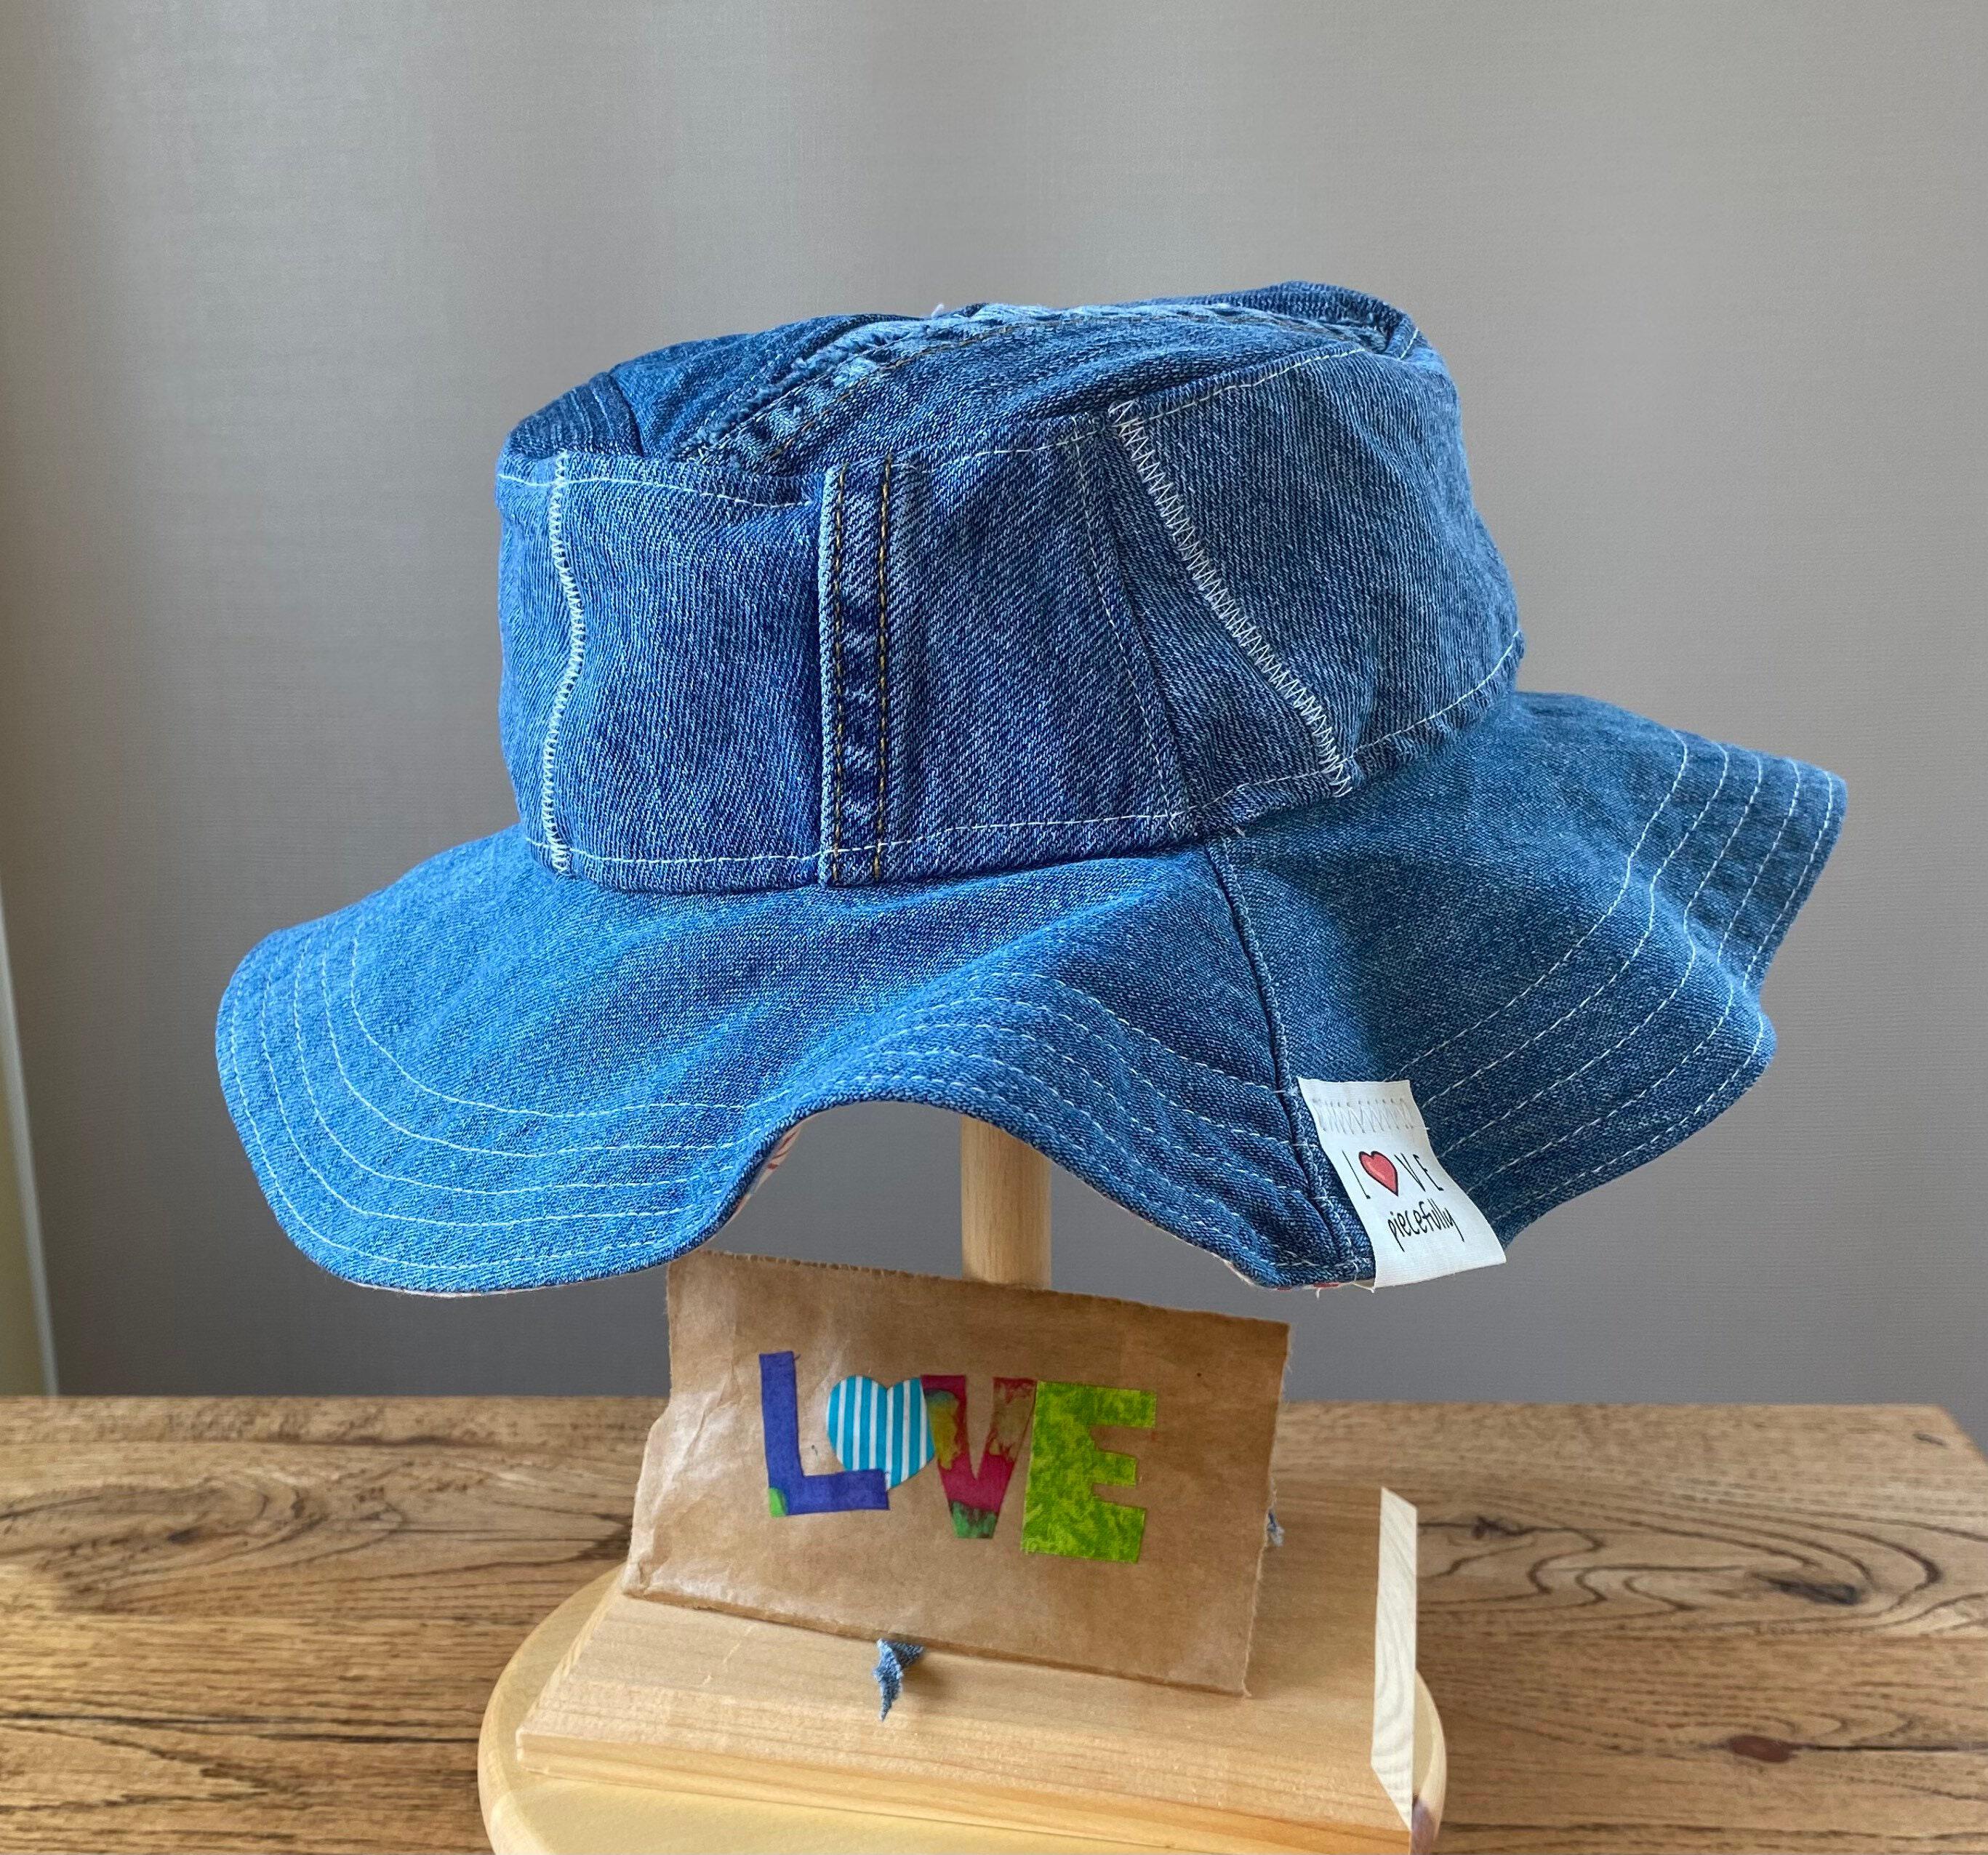 Products :: XL Denim Bucket Hat Floppy Brim Boonie, Distressed Patchwork  Denim Packable Sun Hat, Hippie Boho 70s style Reversible Handmade Aesthetic